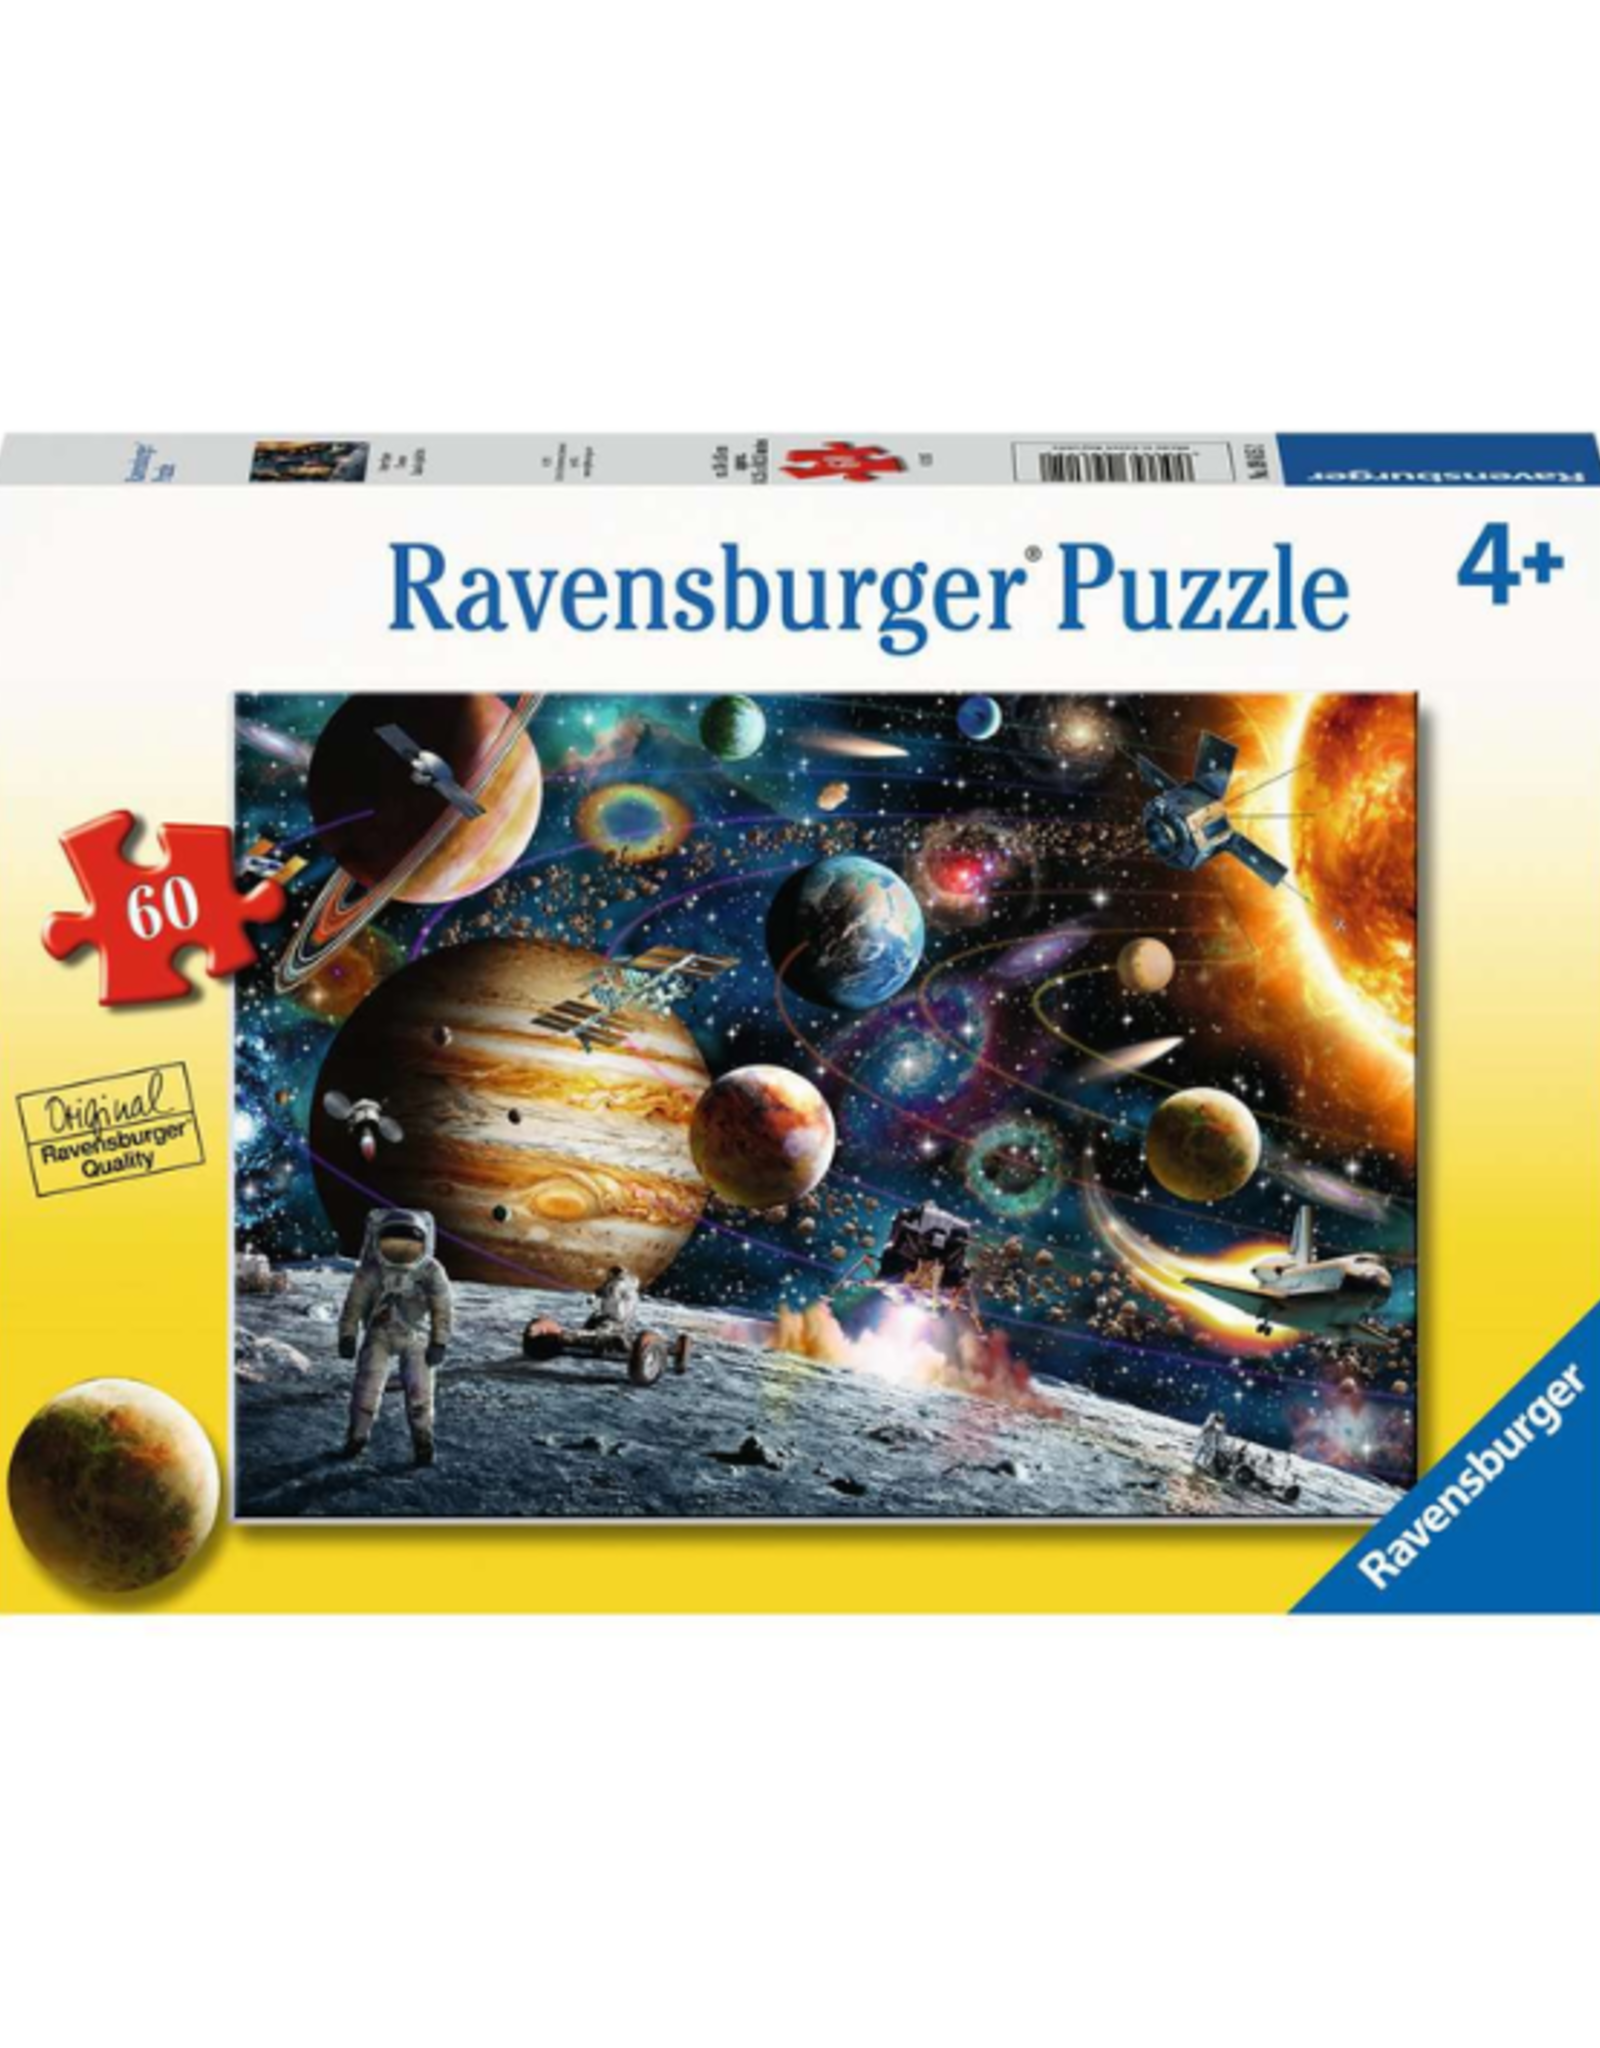 Ravensburger Ravensburger - 4+ - 60pcs - Outer Space